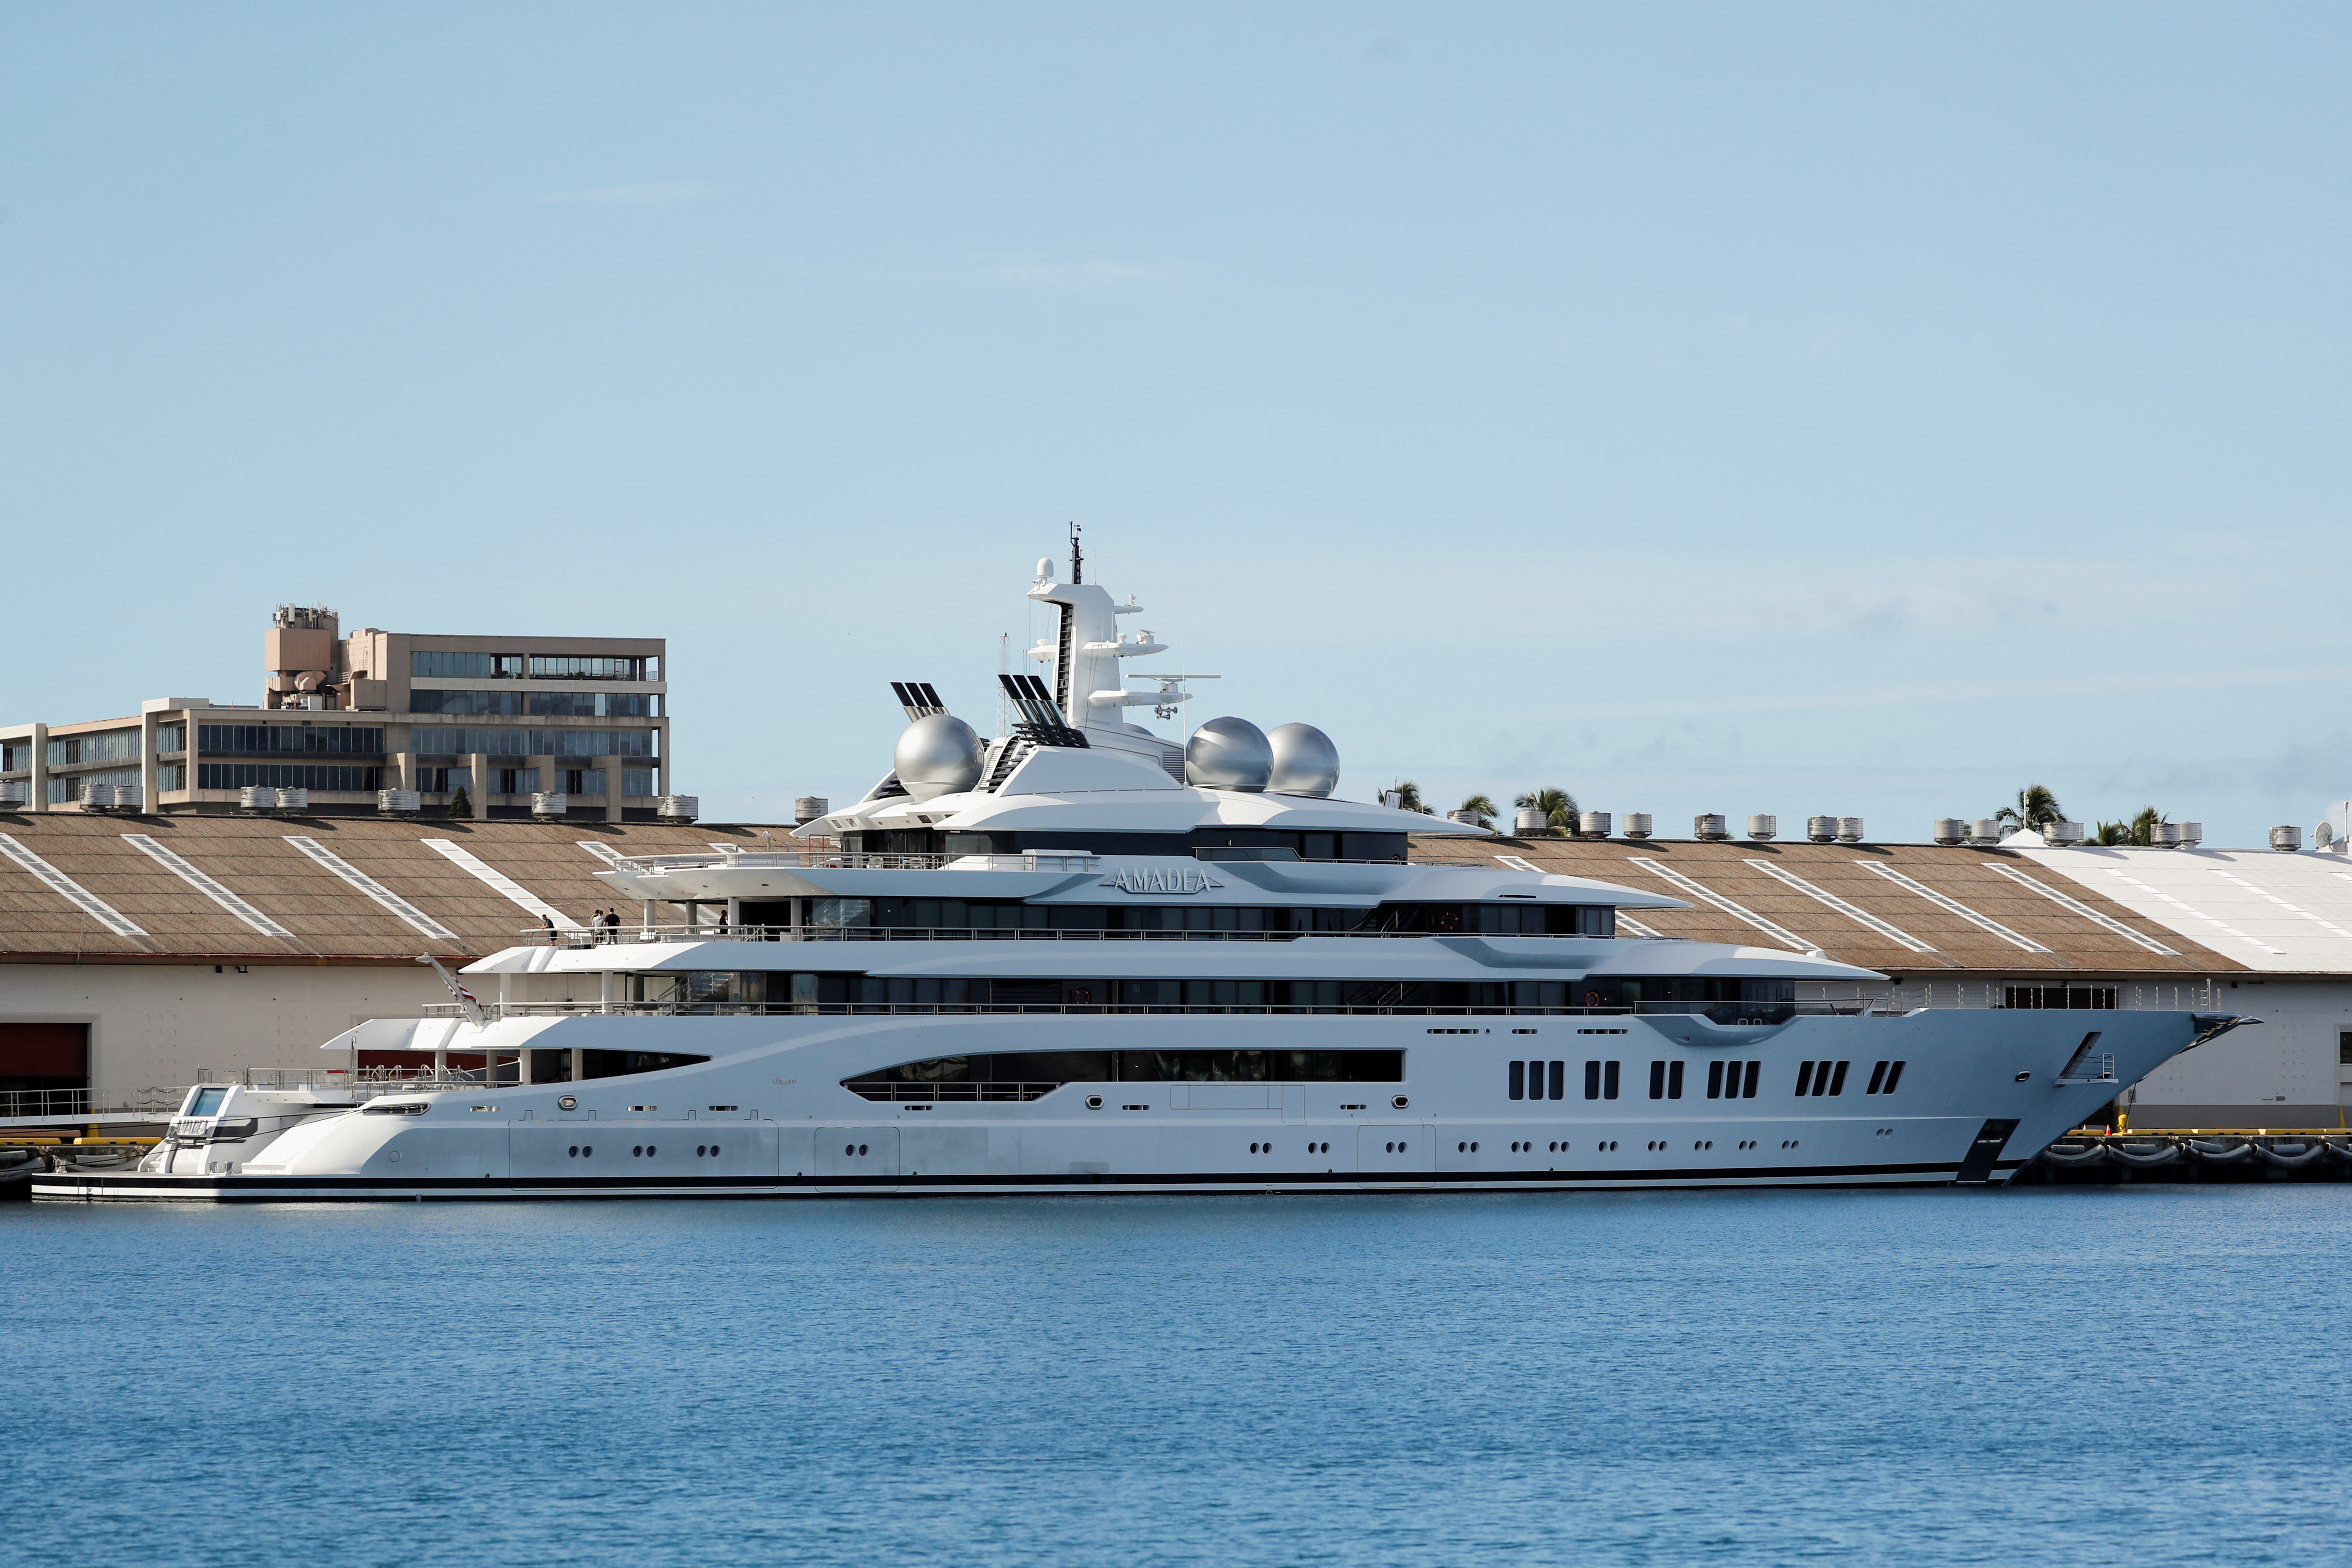 The Russian-owned superyacht, Amadea, seized in Fiji by American law enforcement is docked in Honolulu